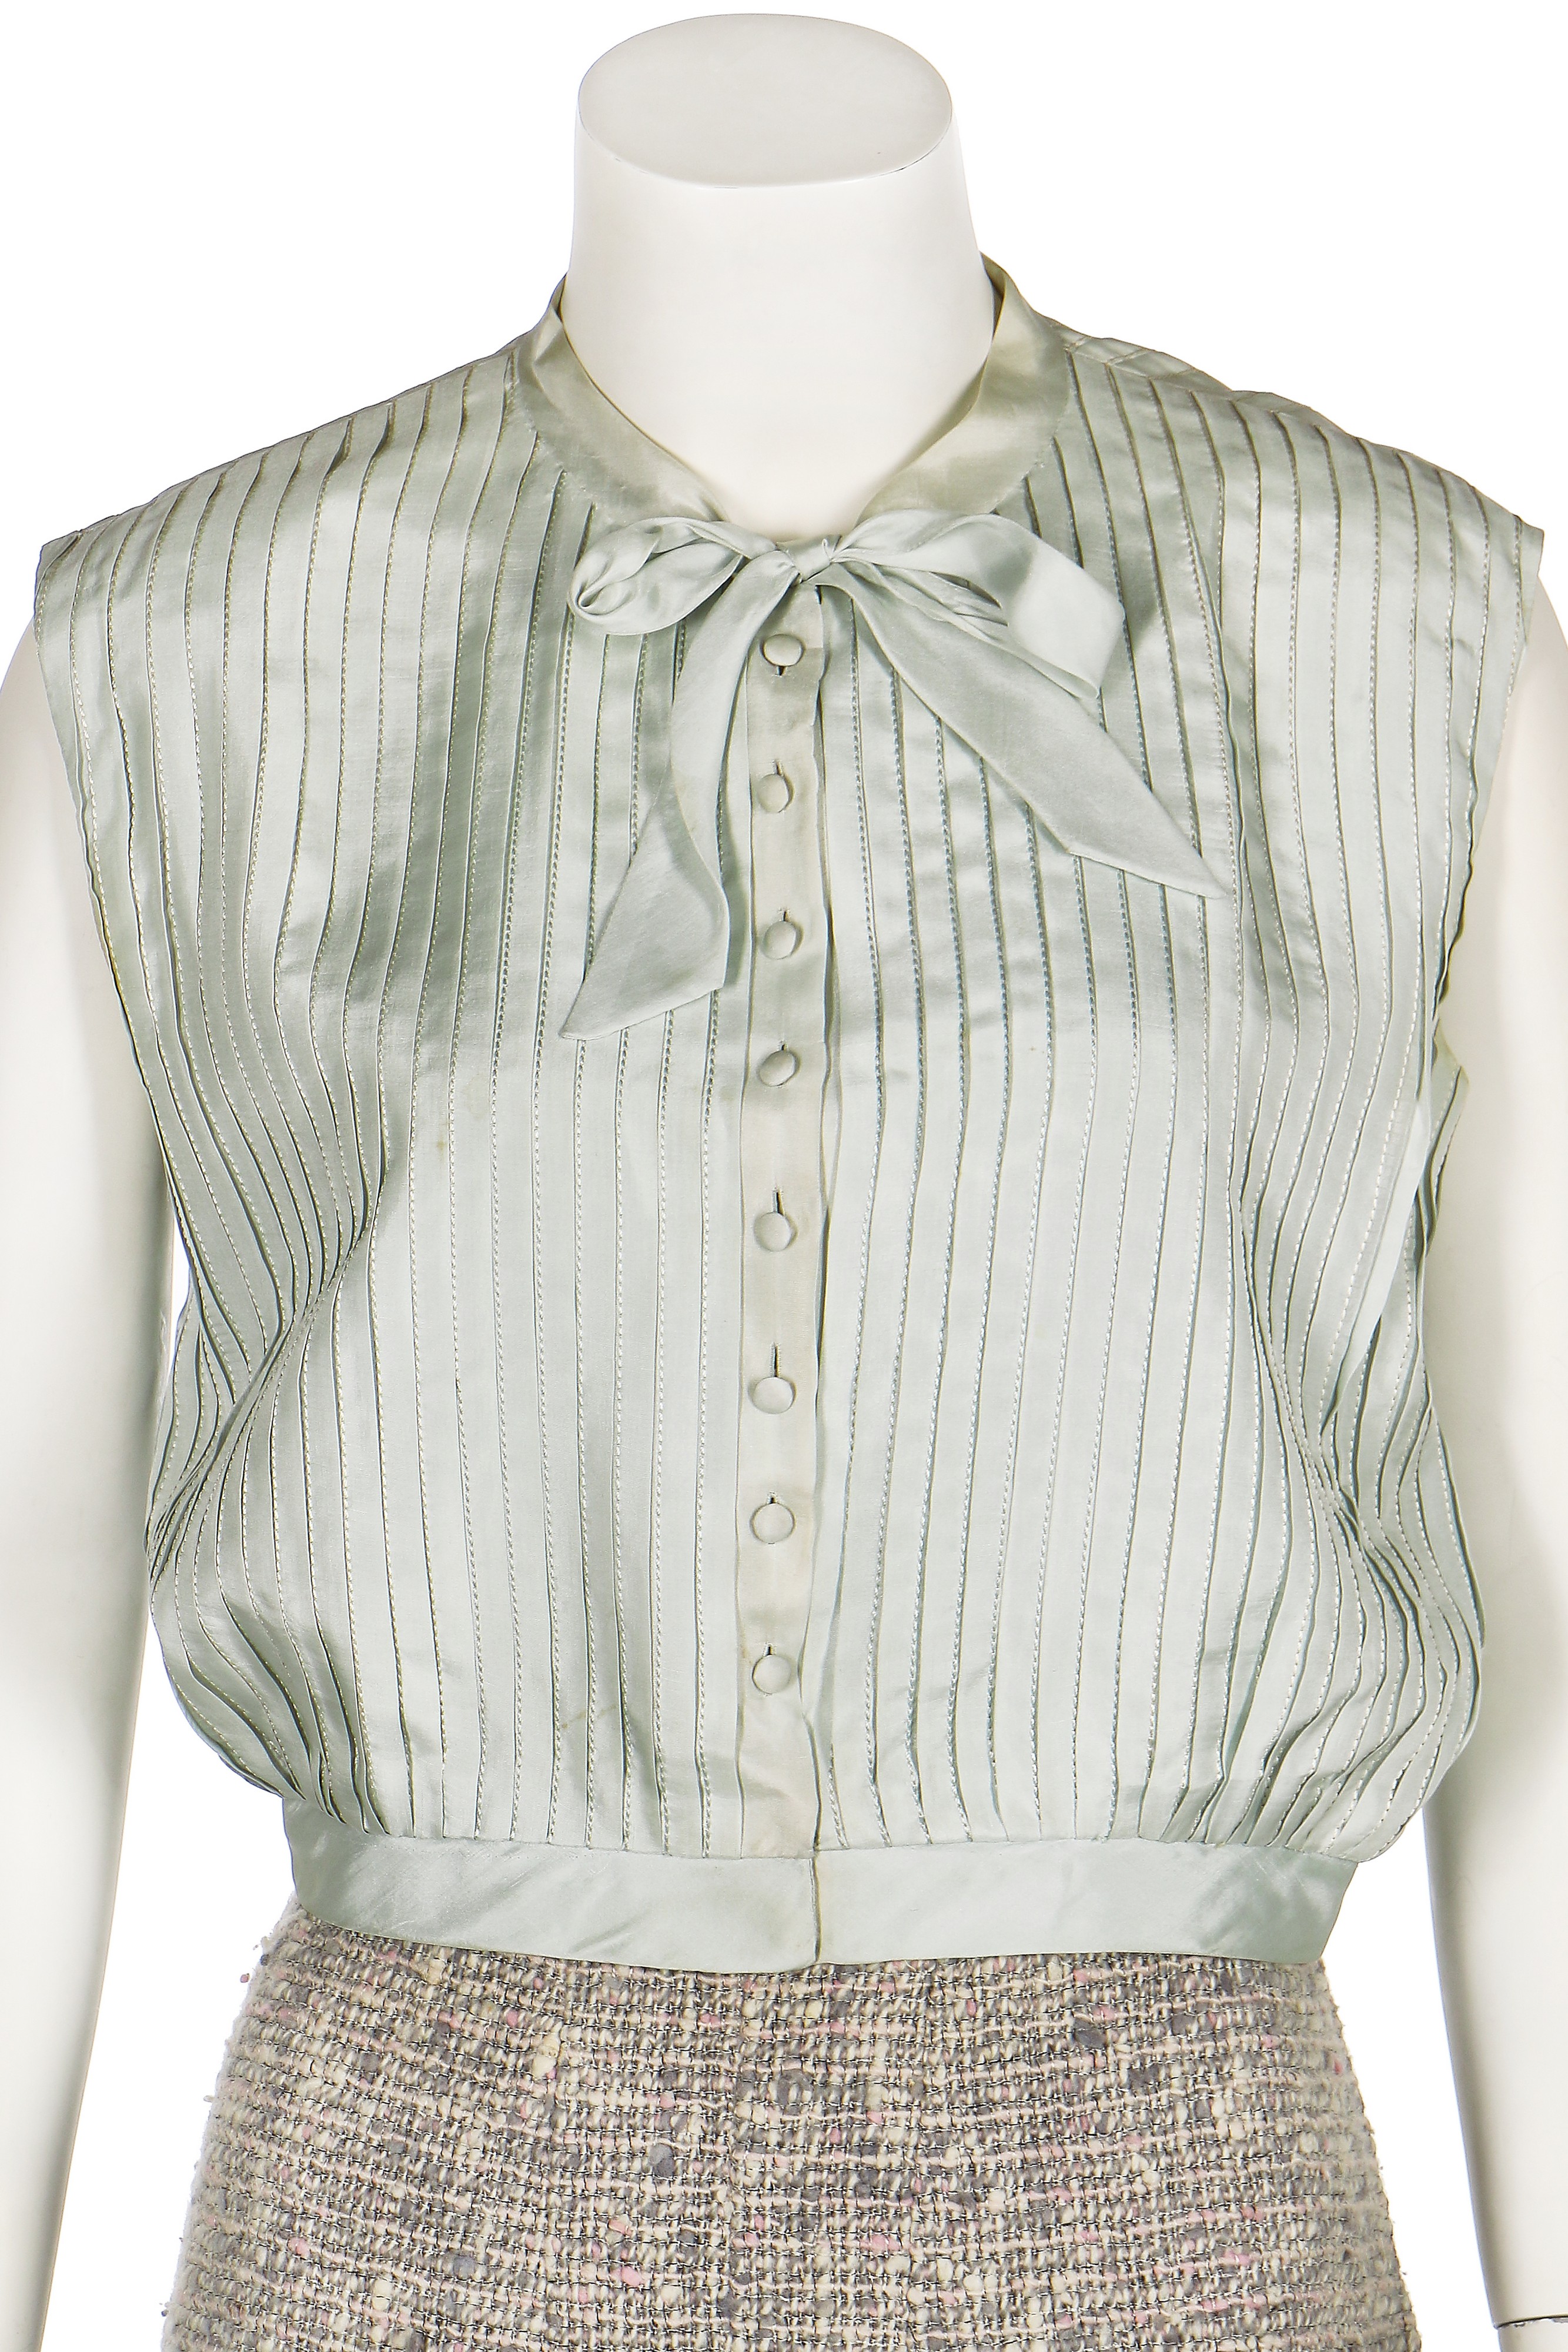 At Auction: CHANEL- Lace Trim Pink Tweed Jacket Skirt Suit Set CC Buttons -  38 US 6 Vintage